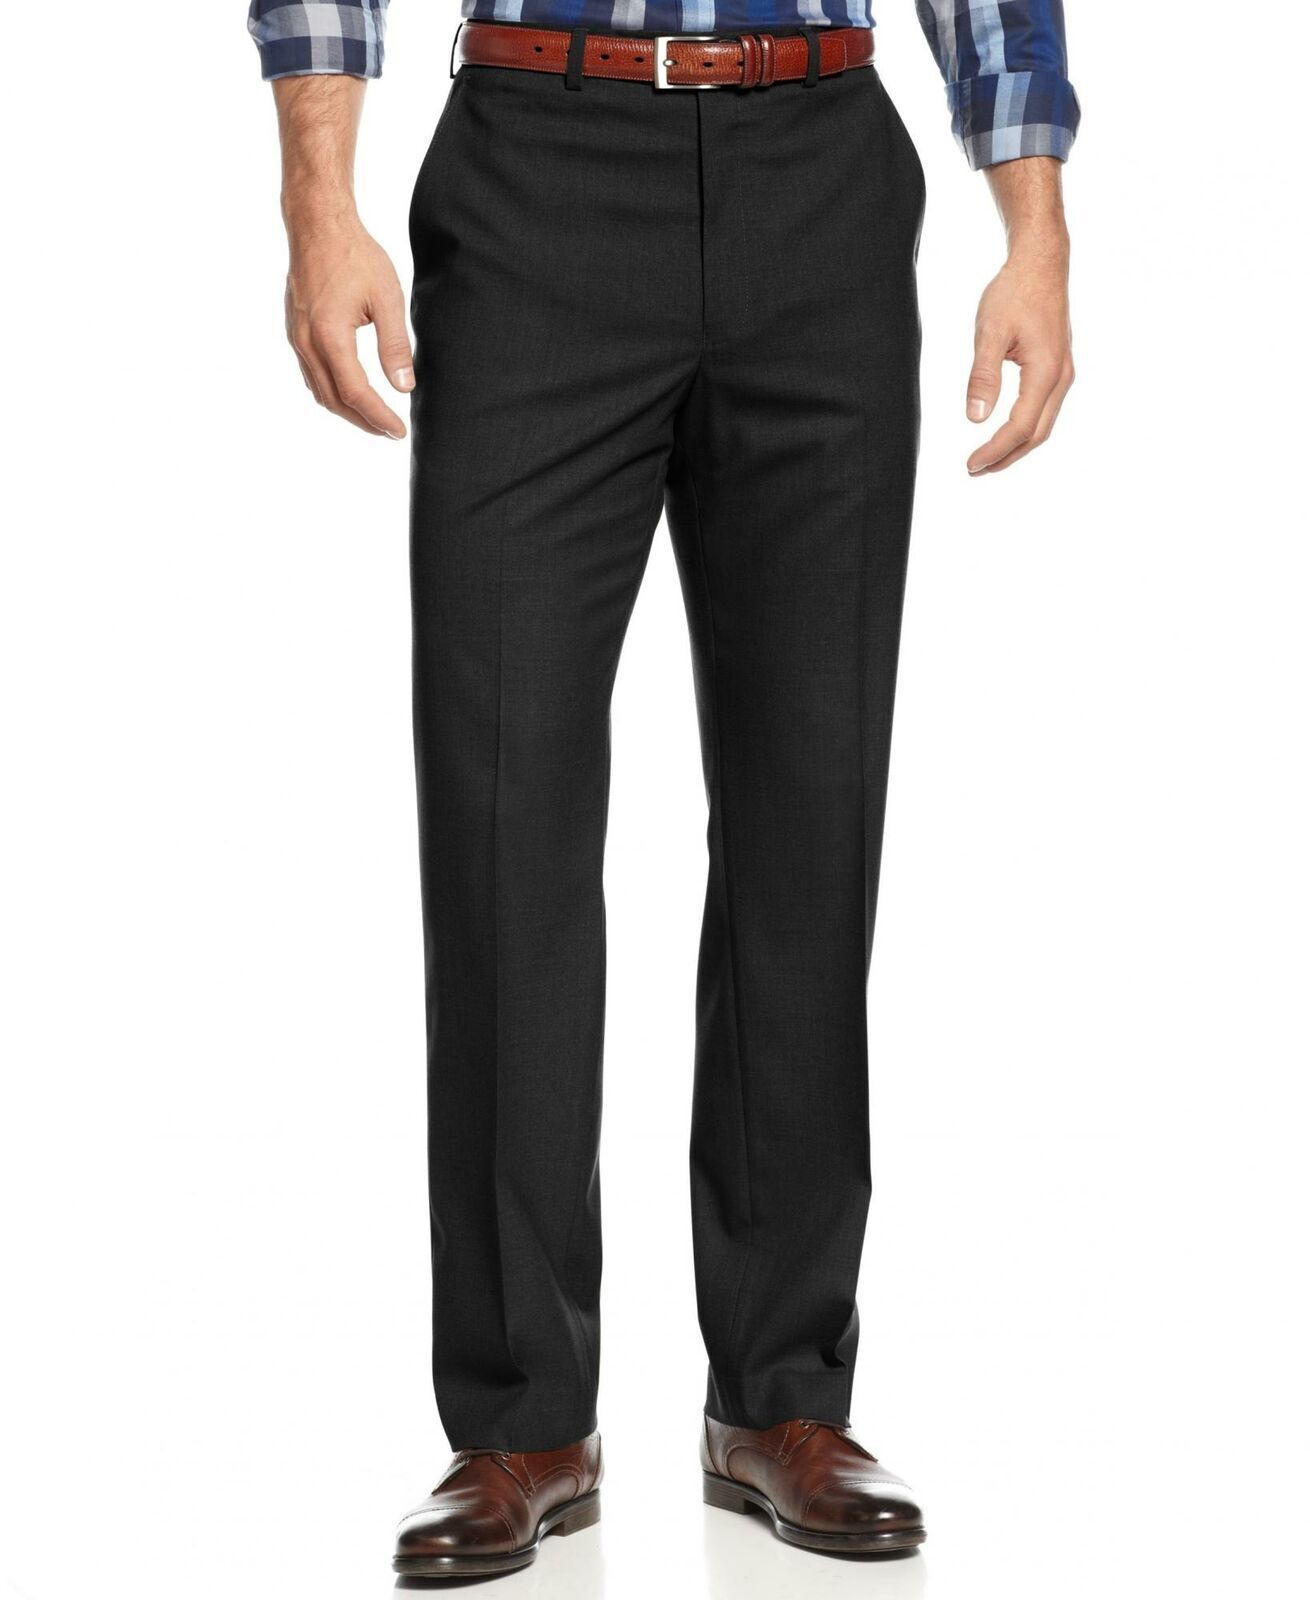 Michael Kors Matisse Men's Solid Classic-Fit Stretch Dress Pants Black-38/34